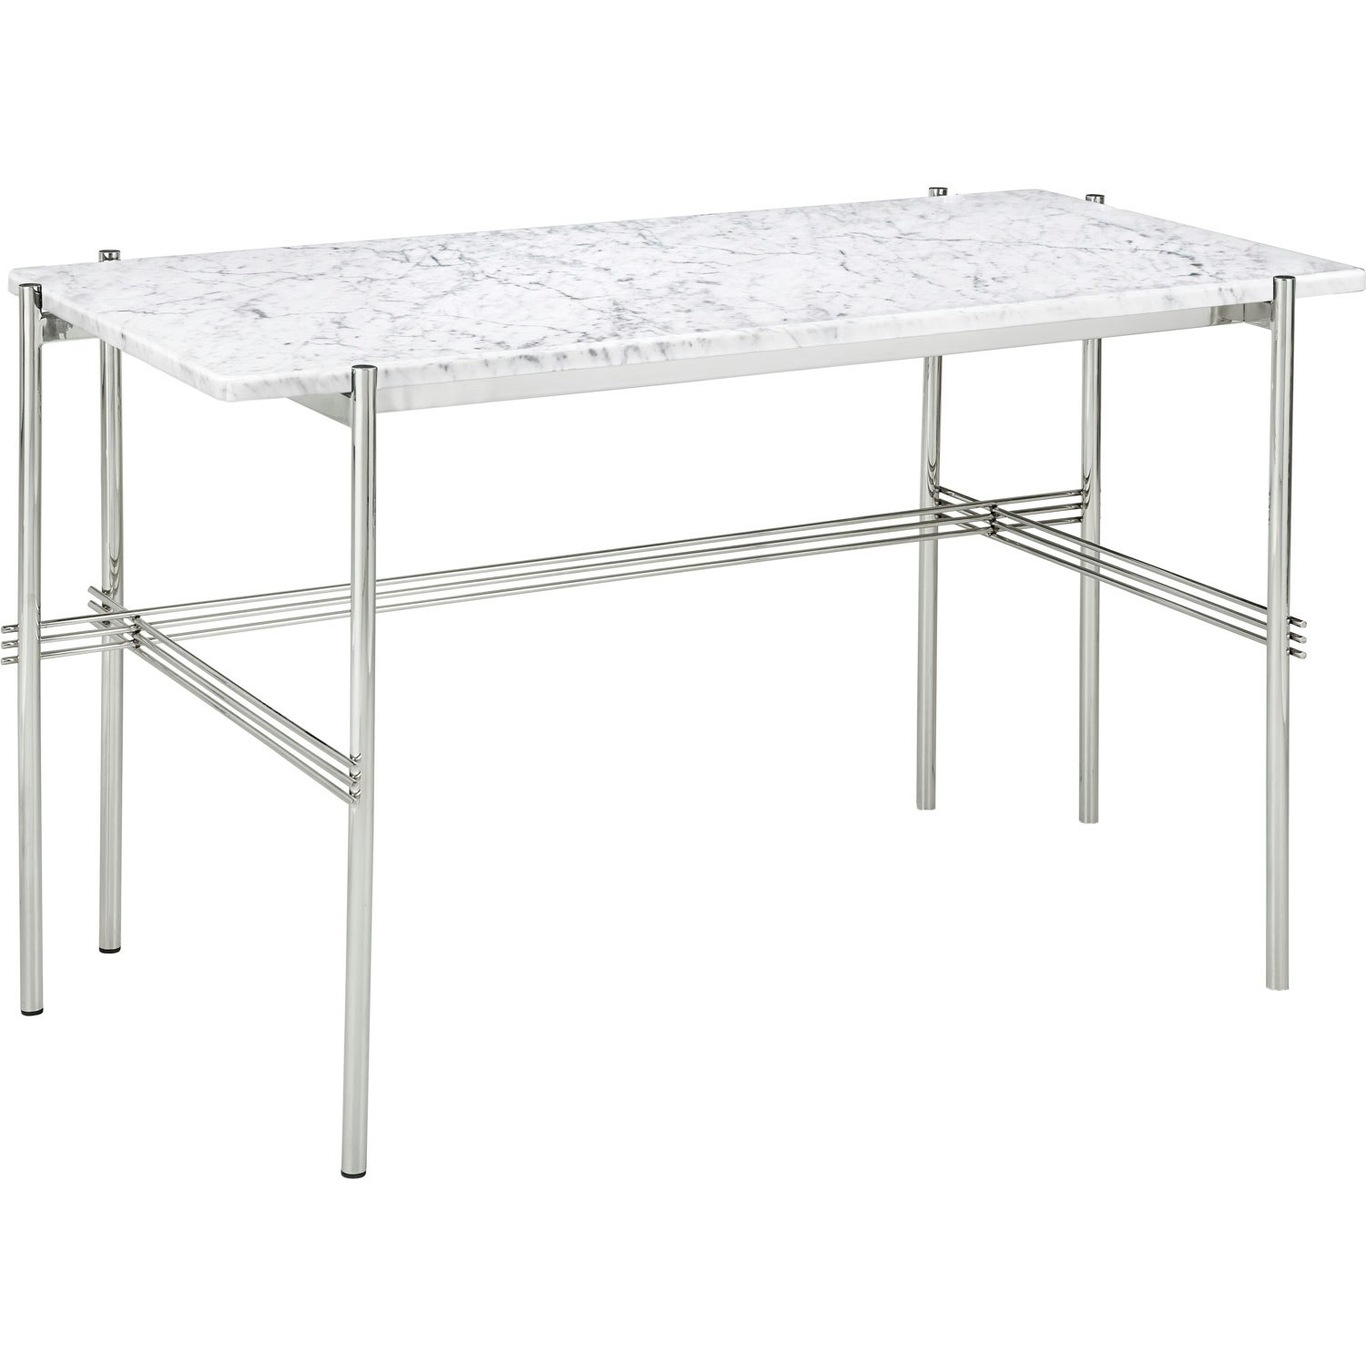 TS Desk 60x120 cm, Polished Steel / White Carrara marble